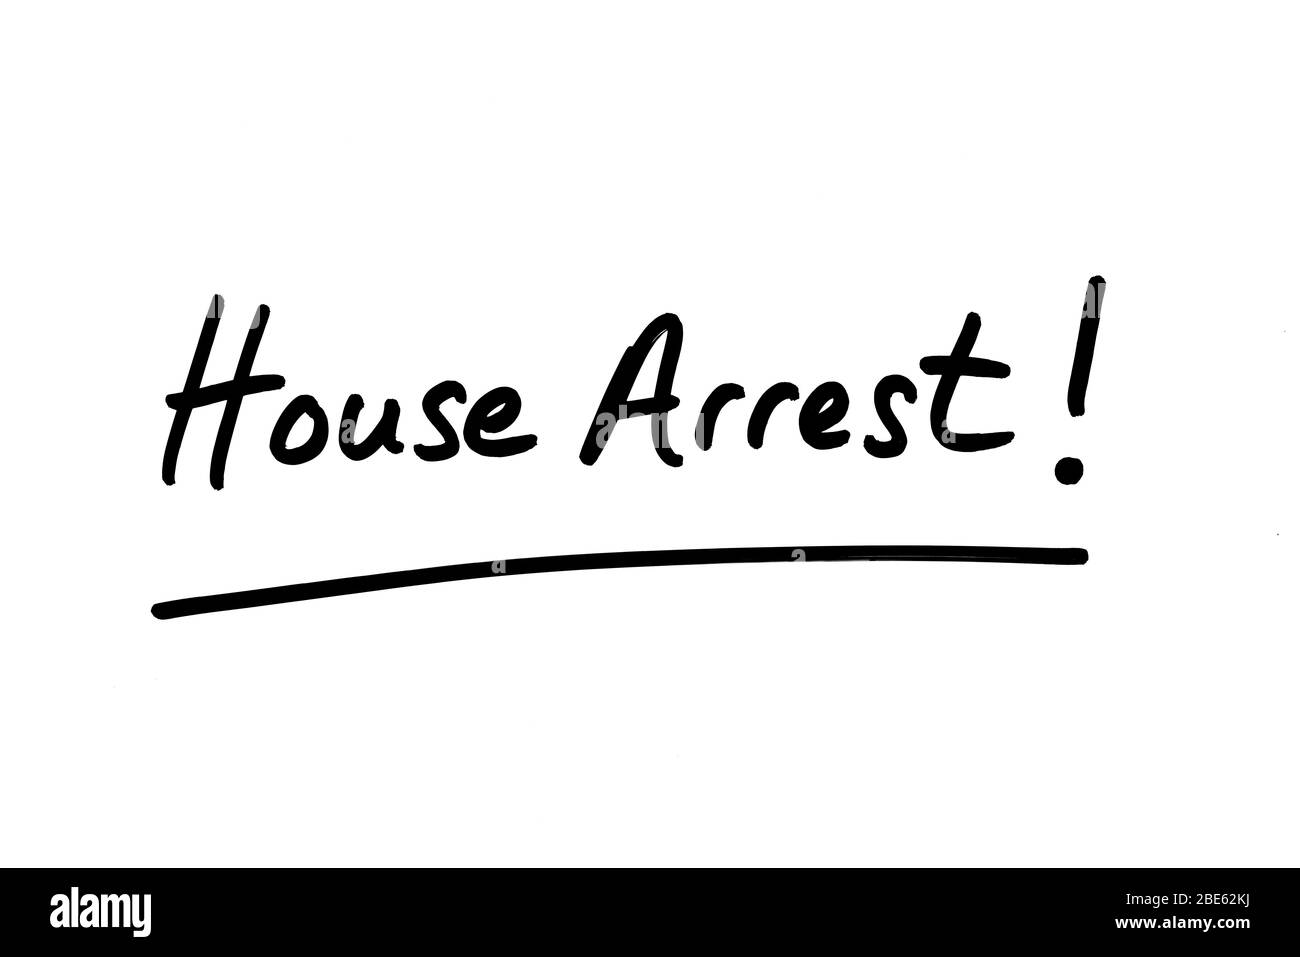 House Arrest! handwritten on a white background. Stock Photo